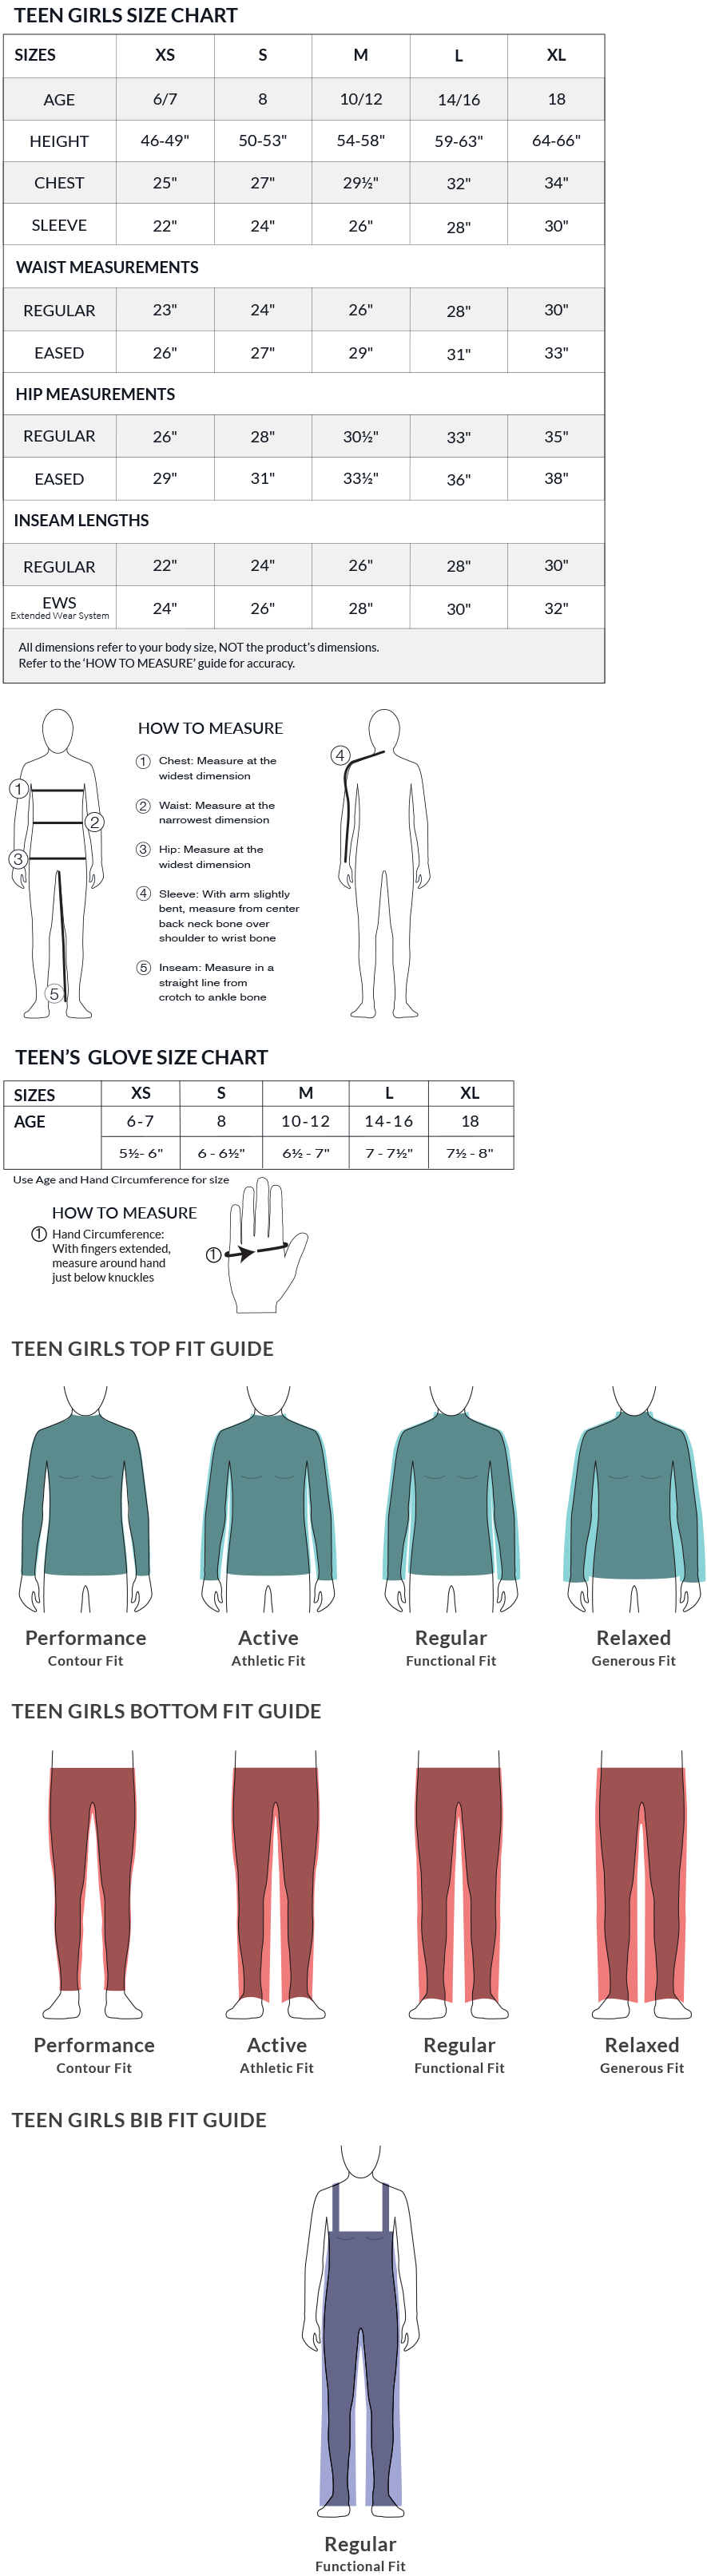 Teen Girls Sizing Chart – Obermeyer E-Commerce